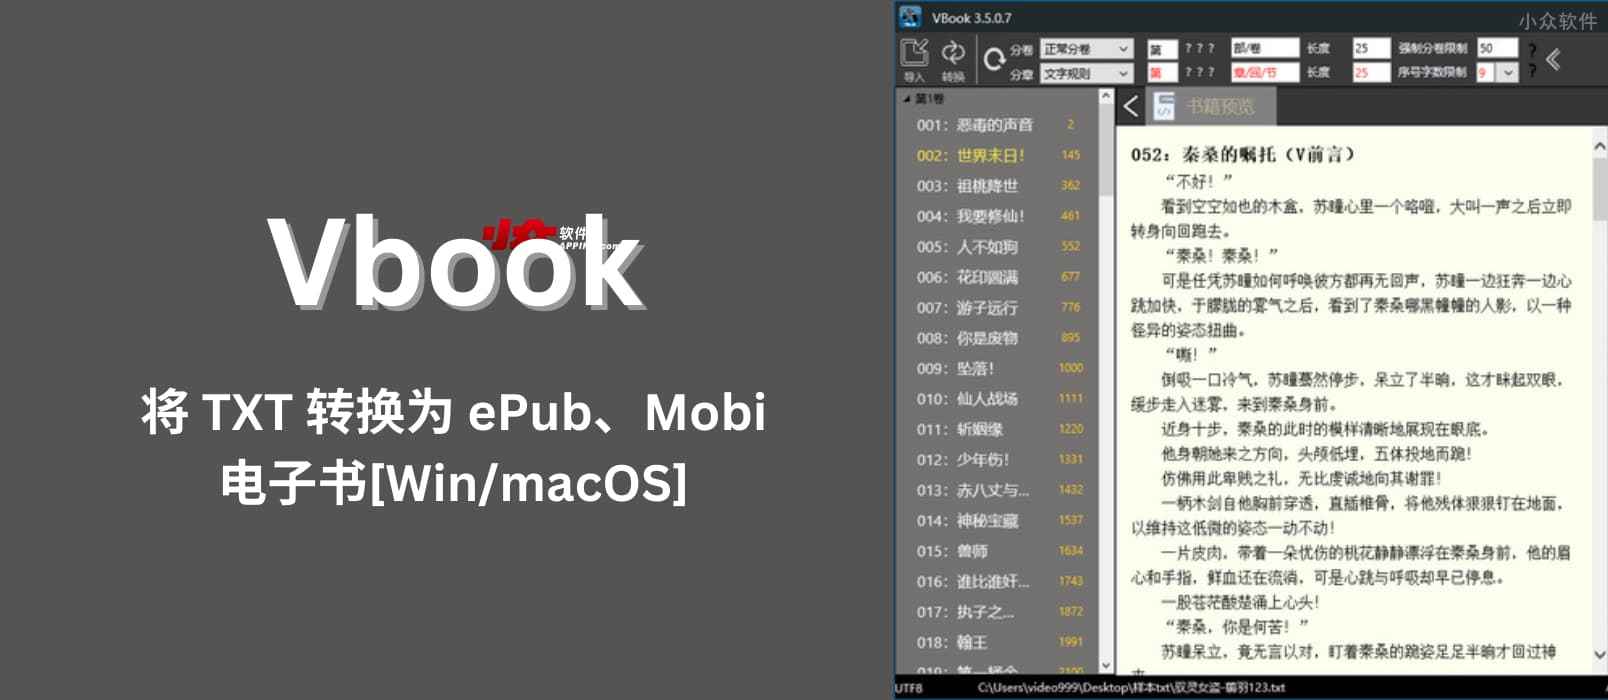 Vbook – 将 TXT 转换为 ePub、Mobi 电子书格式，支持分卷、目录、封面、行距尺寸等[Win/macOS]